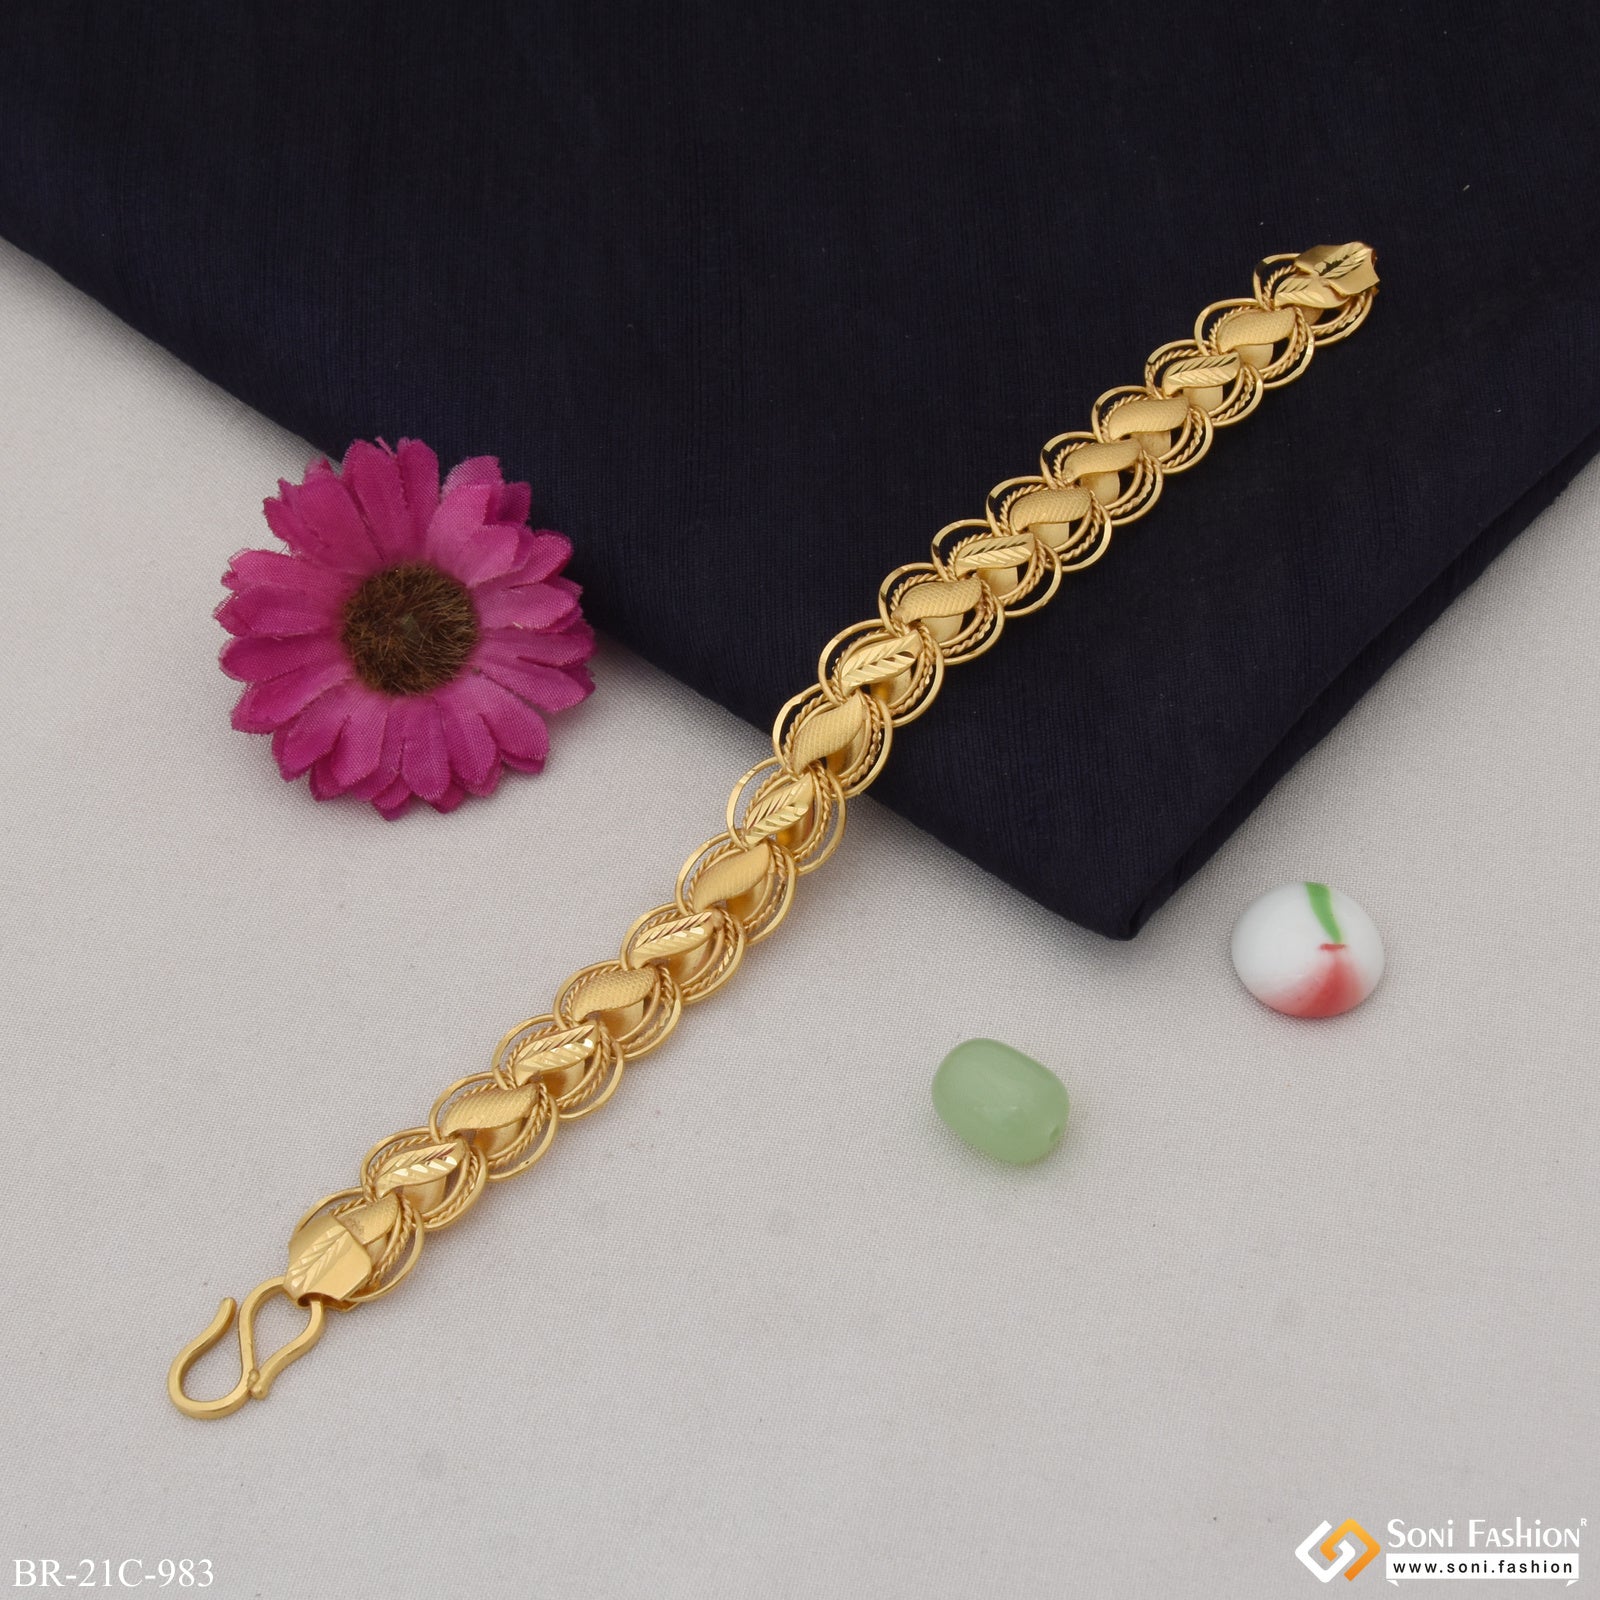 22kt Gold Bracelet ARJB02 - Wishque | Sri Lanka's Premium Online Shop! Send  Gifts to Sri Lanka